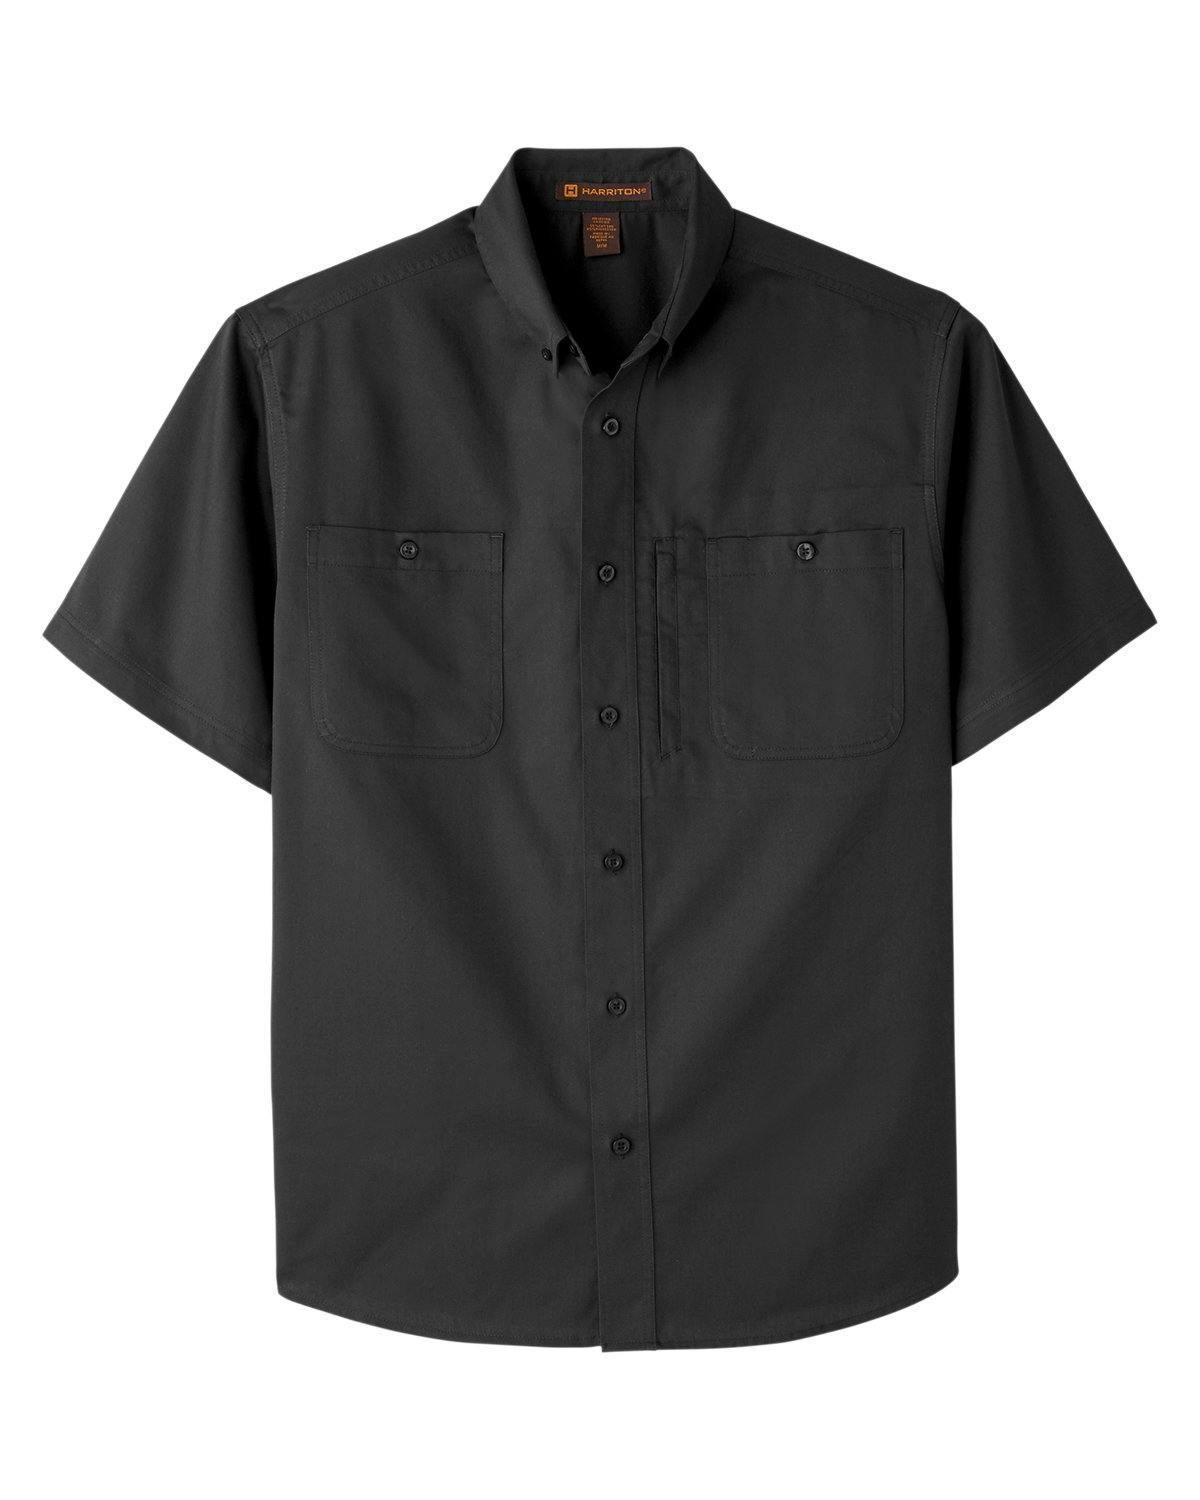 Image for Men's Advantage IL Short-Sleeve Work Shirt